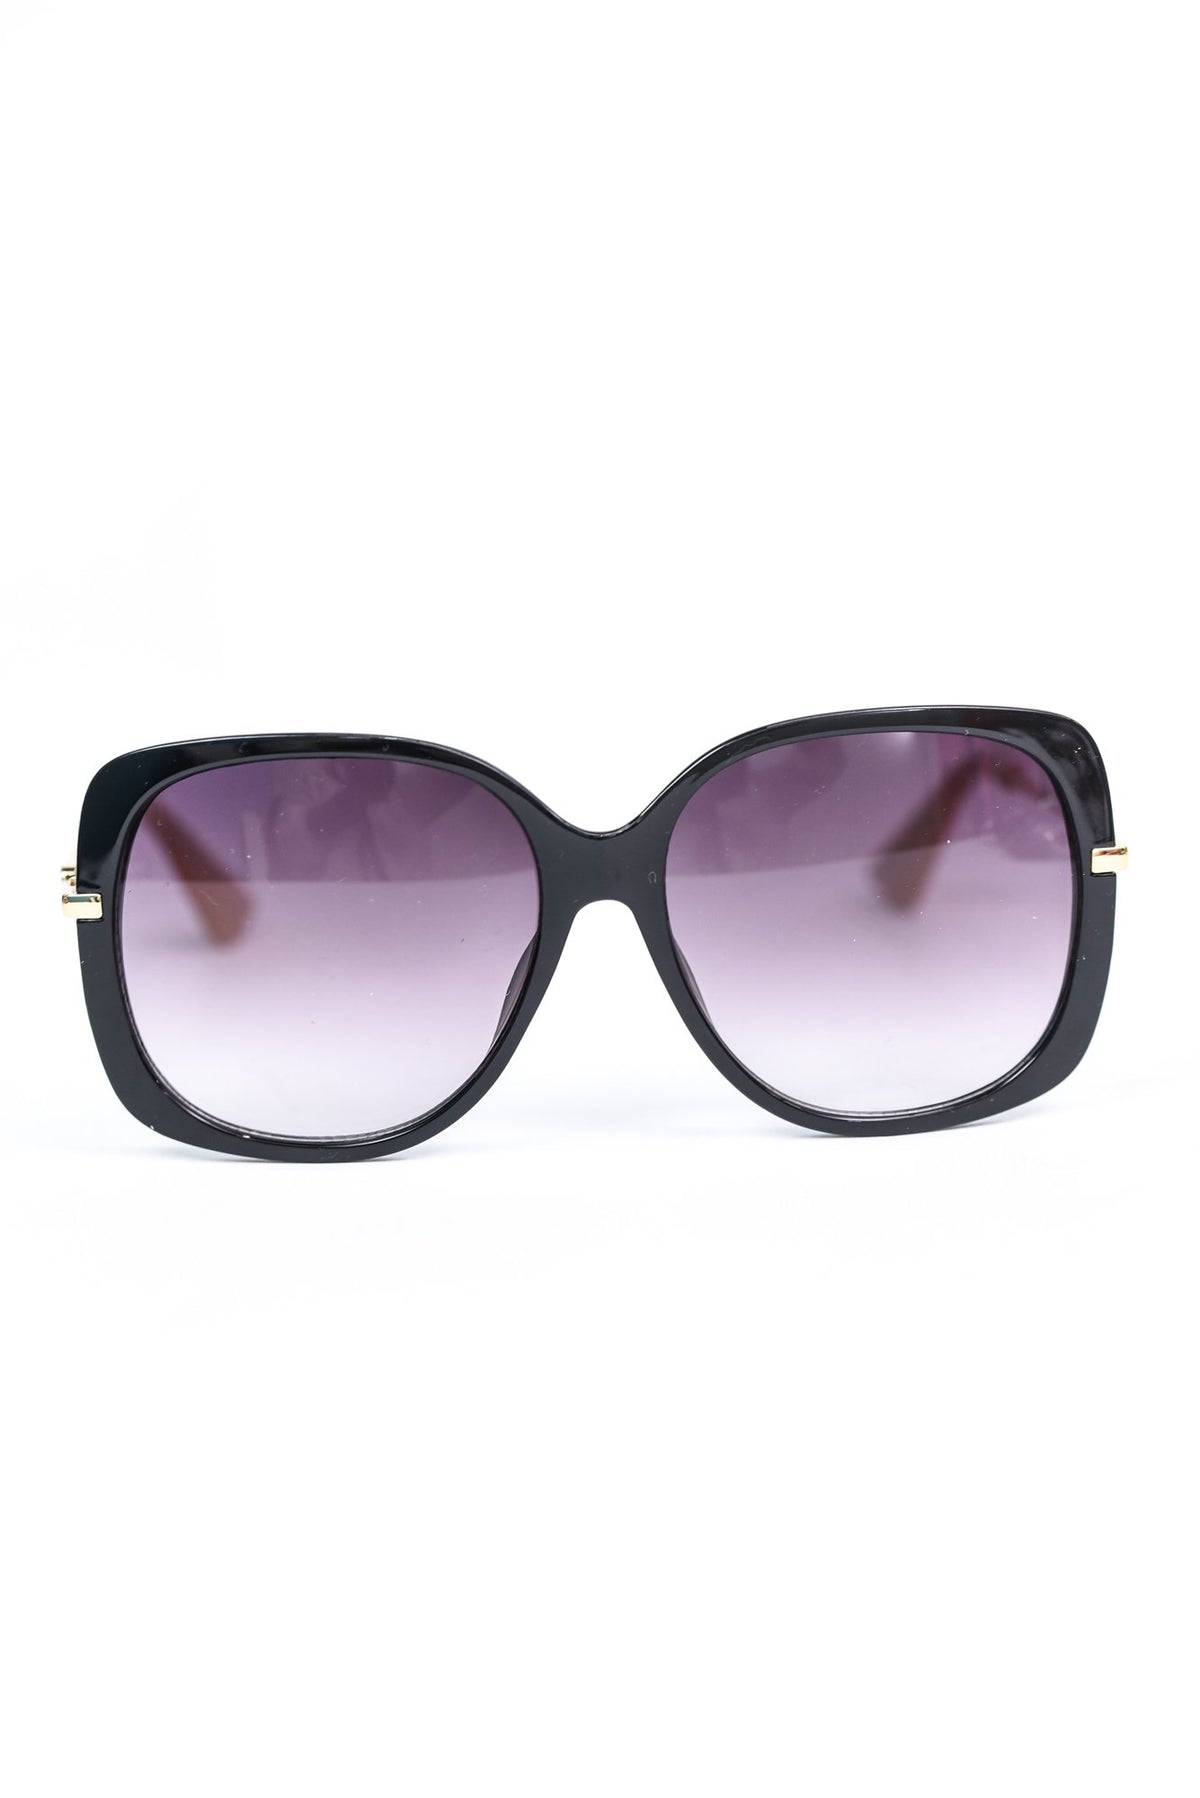 Black Frame/Black Ombre Lens Oval Sunglasses - SGL292BK - FREE hard case